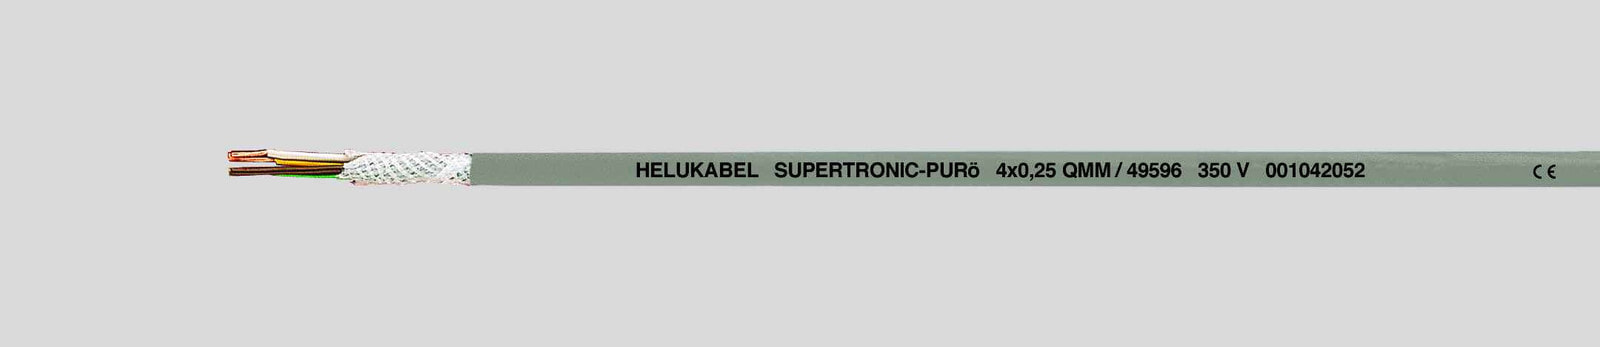 Helukabel 49595 - Low voltage cable - Grey - Cooper - 0.25 mm² - 7.5 kg/km - -5 - 70 °C